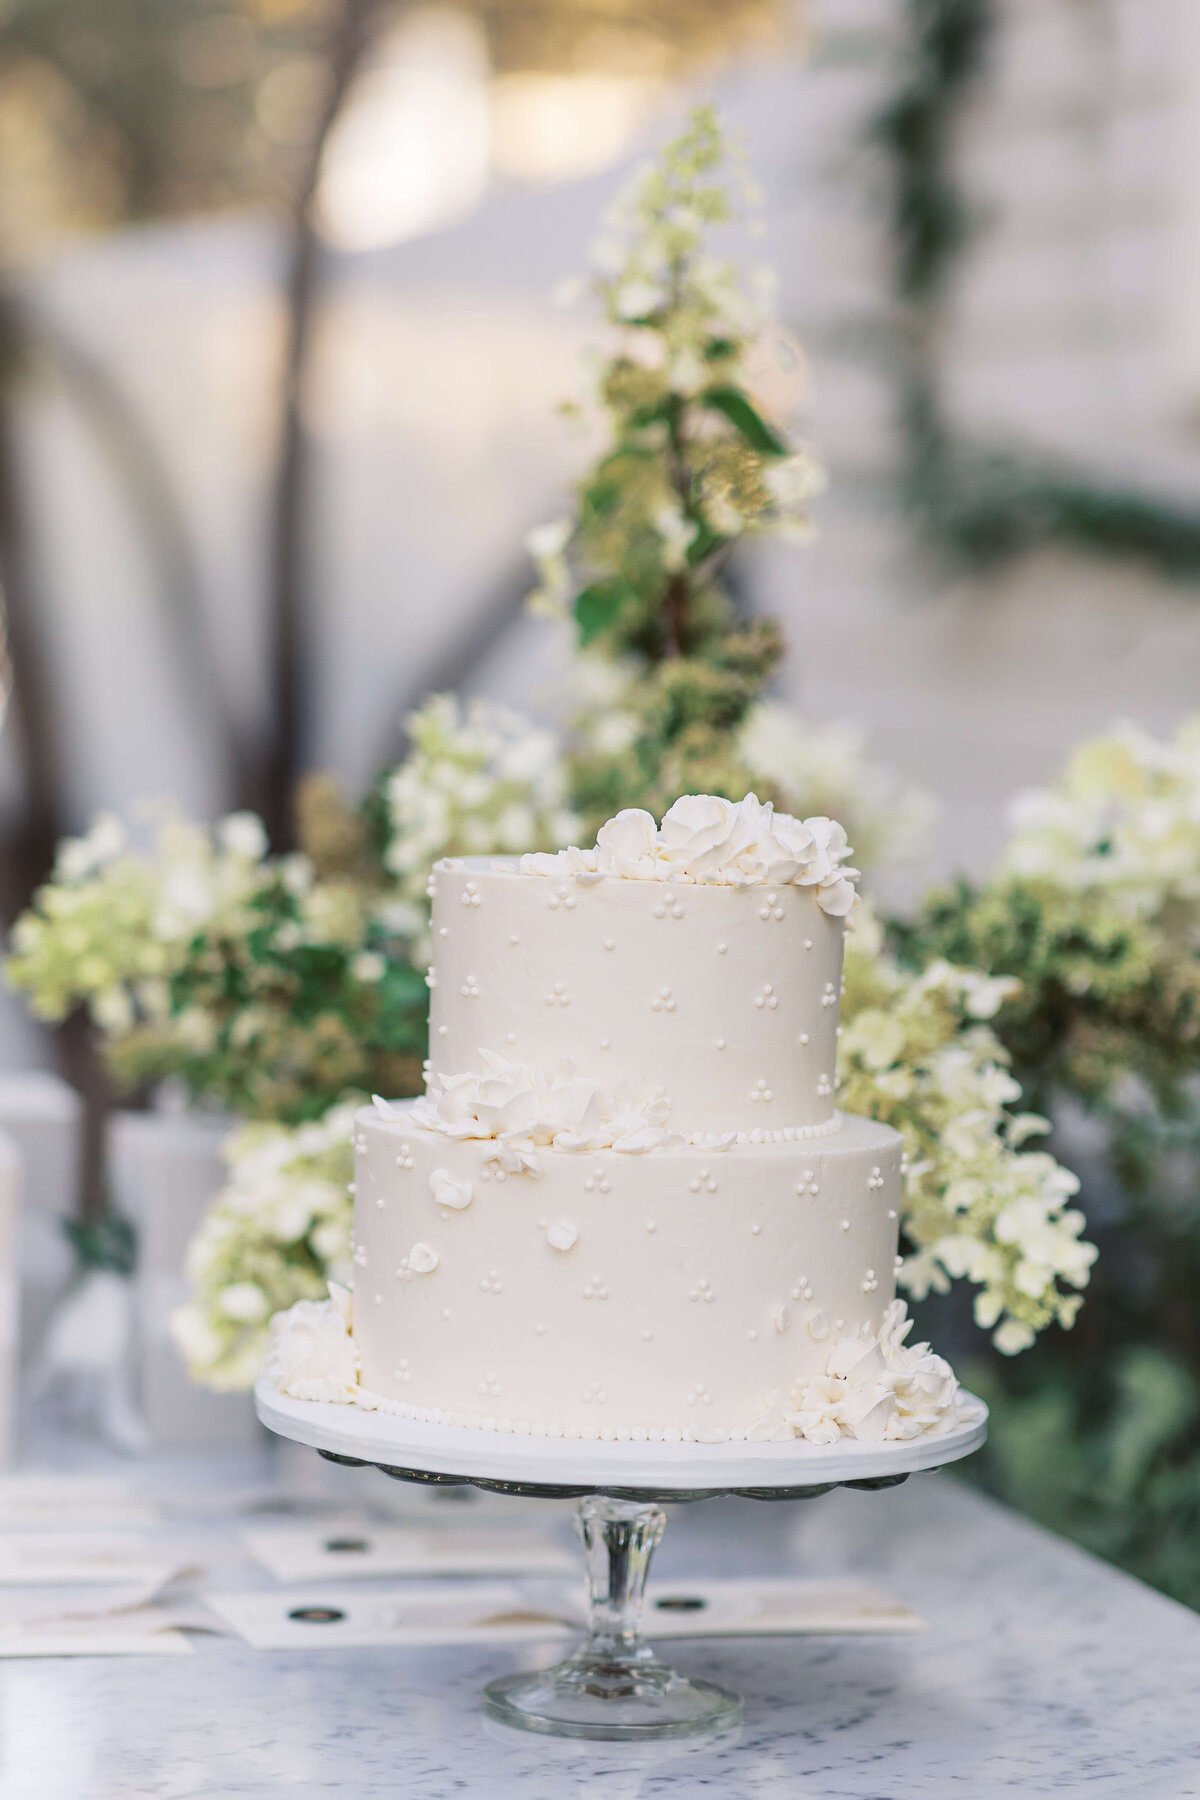 Classic wedding cake for intimate wedding.